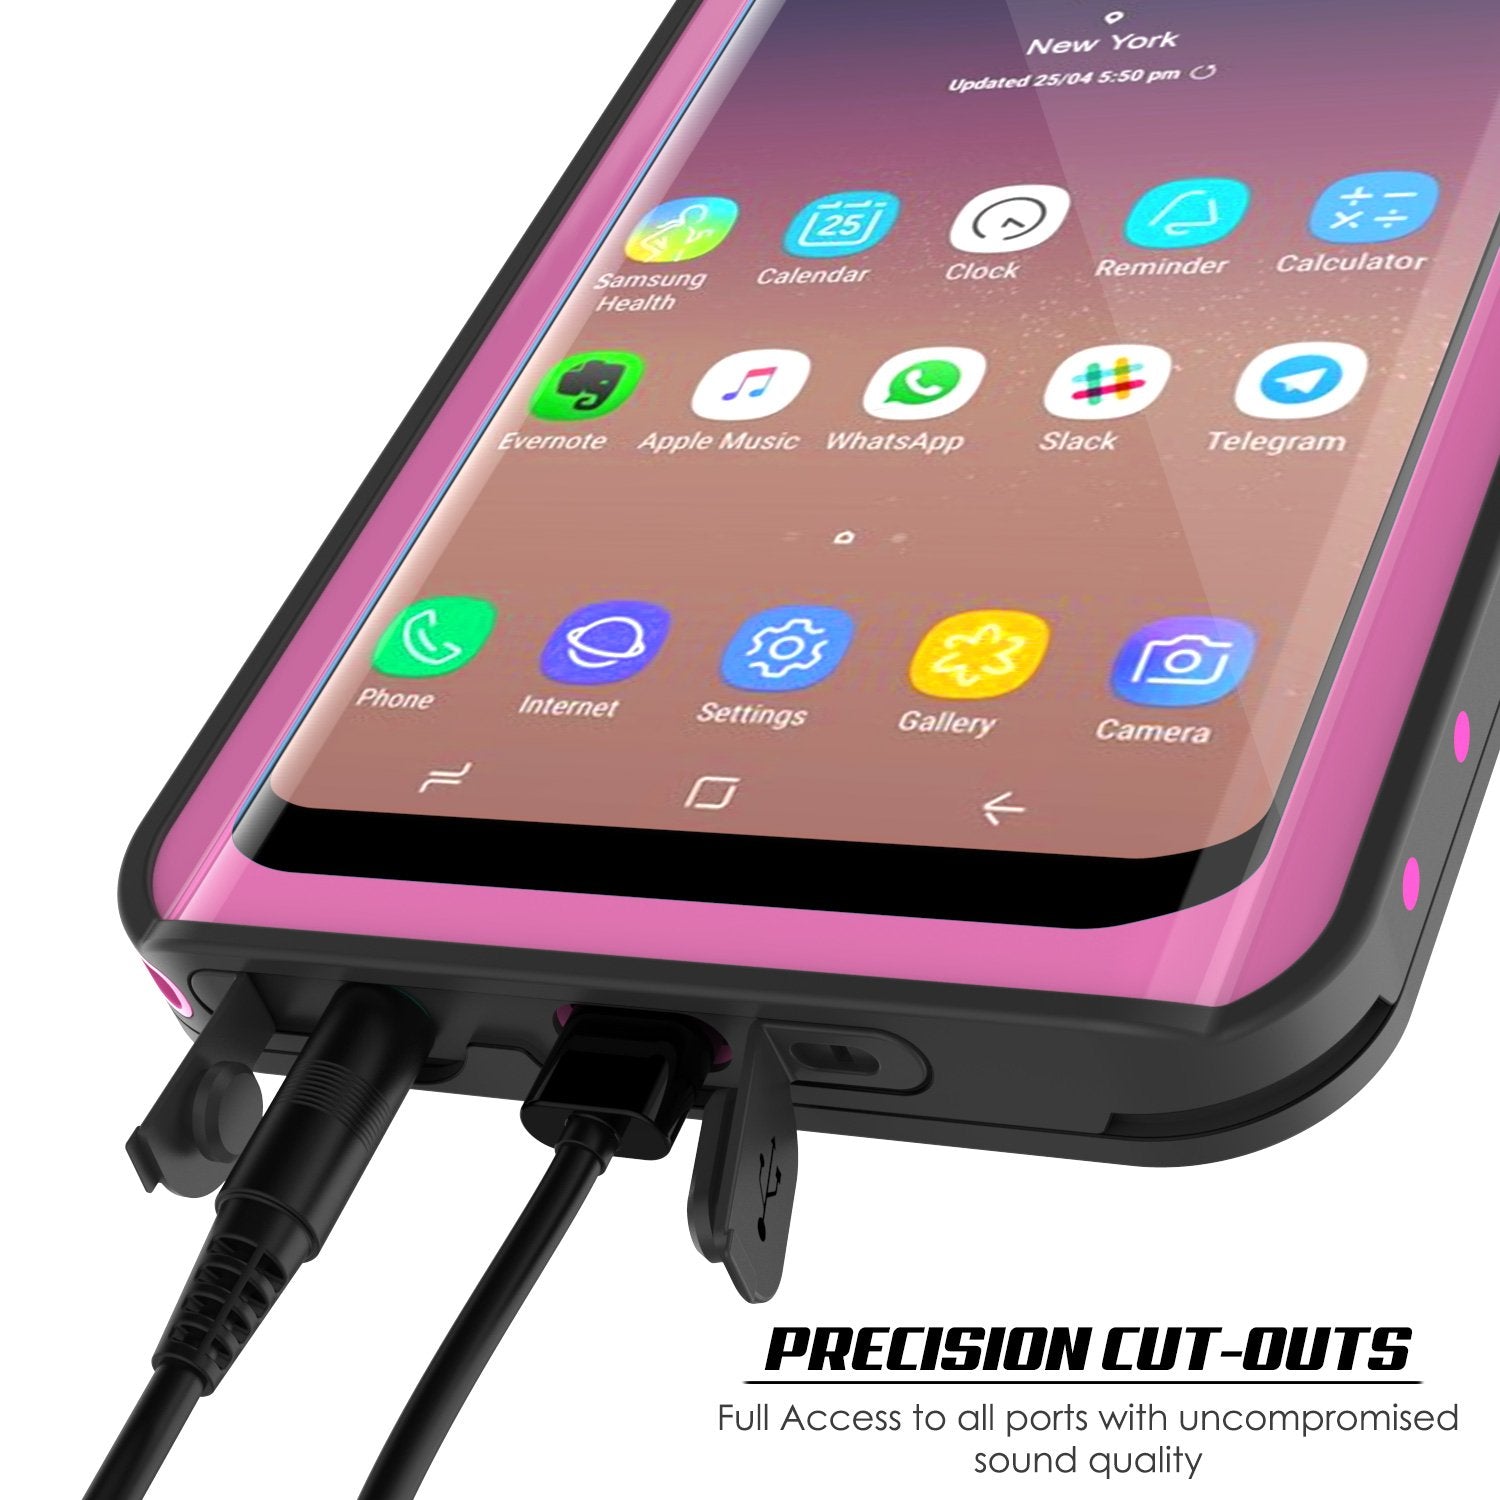 Galaxy S9 Plus Waterproof Case PunkCase StudStar Pink Thin 6.6ft Underwater IP68 Shock/Snow Proof - PunkCase NZ